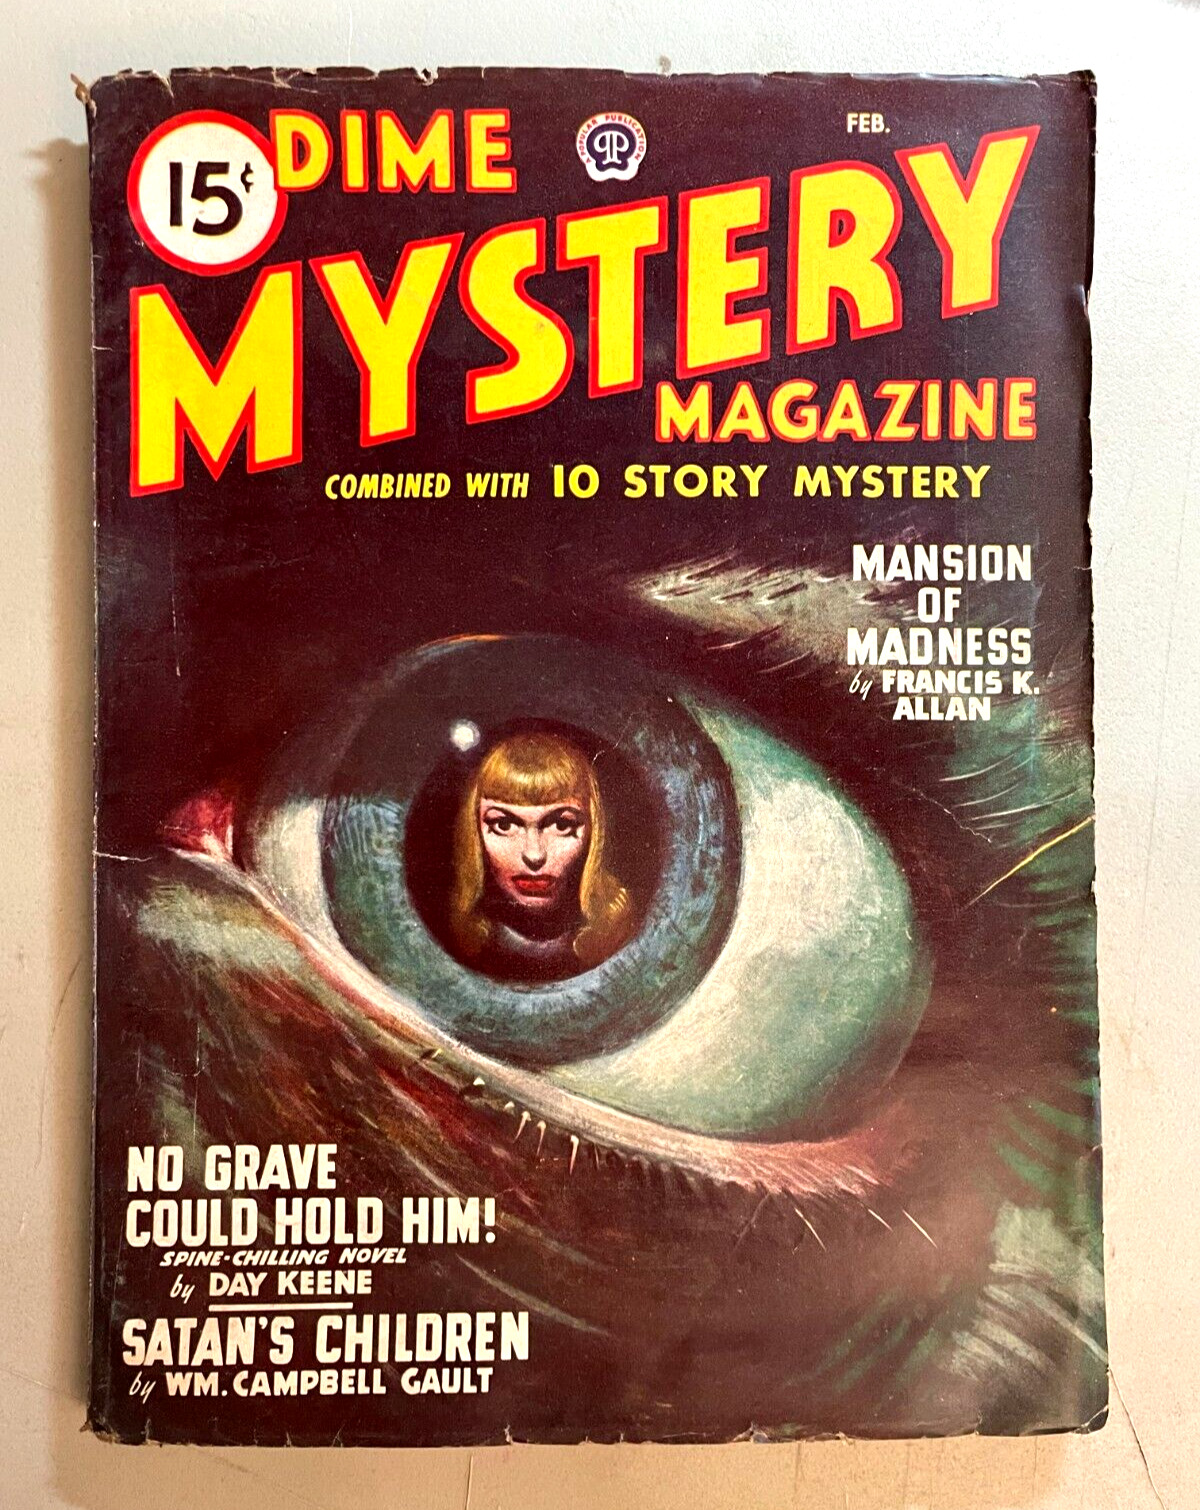 Dime Mystery Magazine / FEBRUARY 1948 / Pulp / EYEBALL Cover